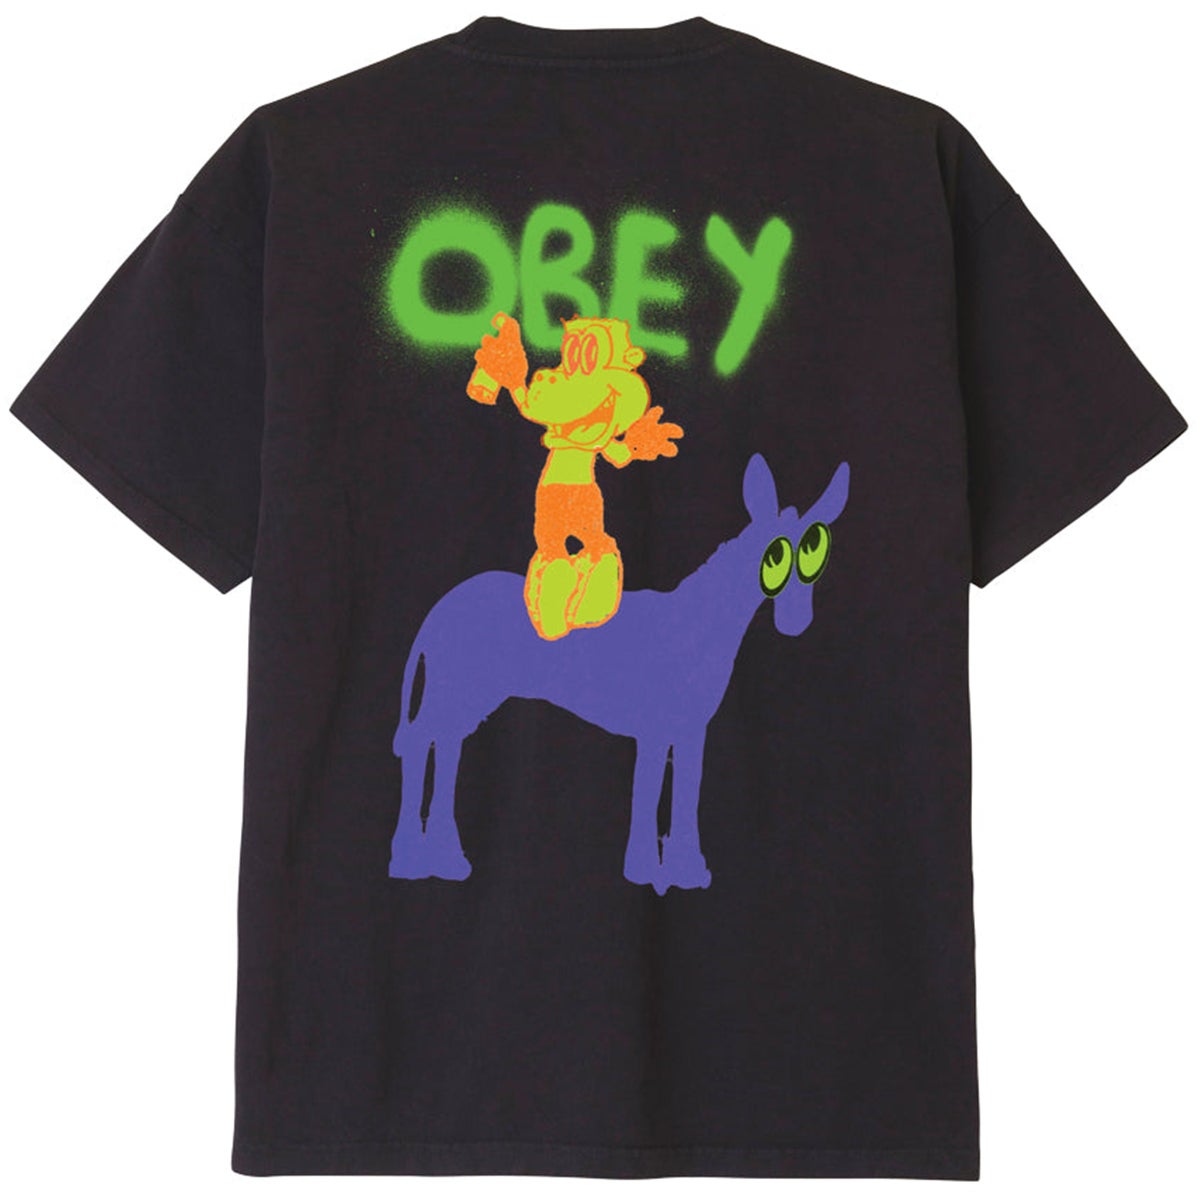 Obey Donkey Tee